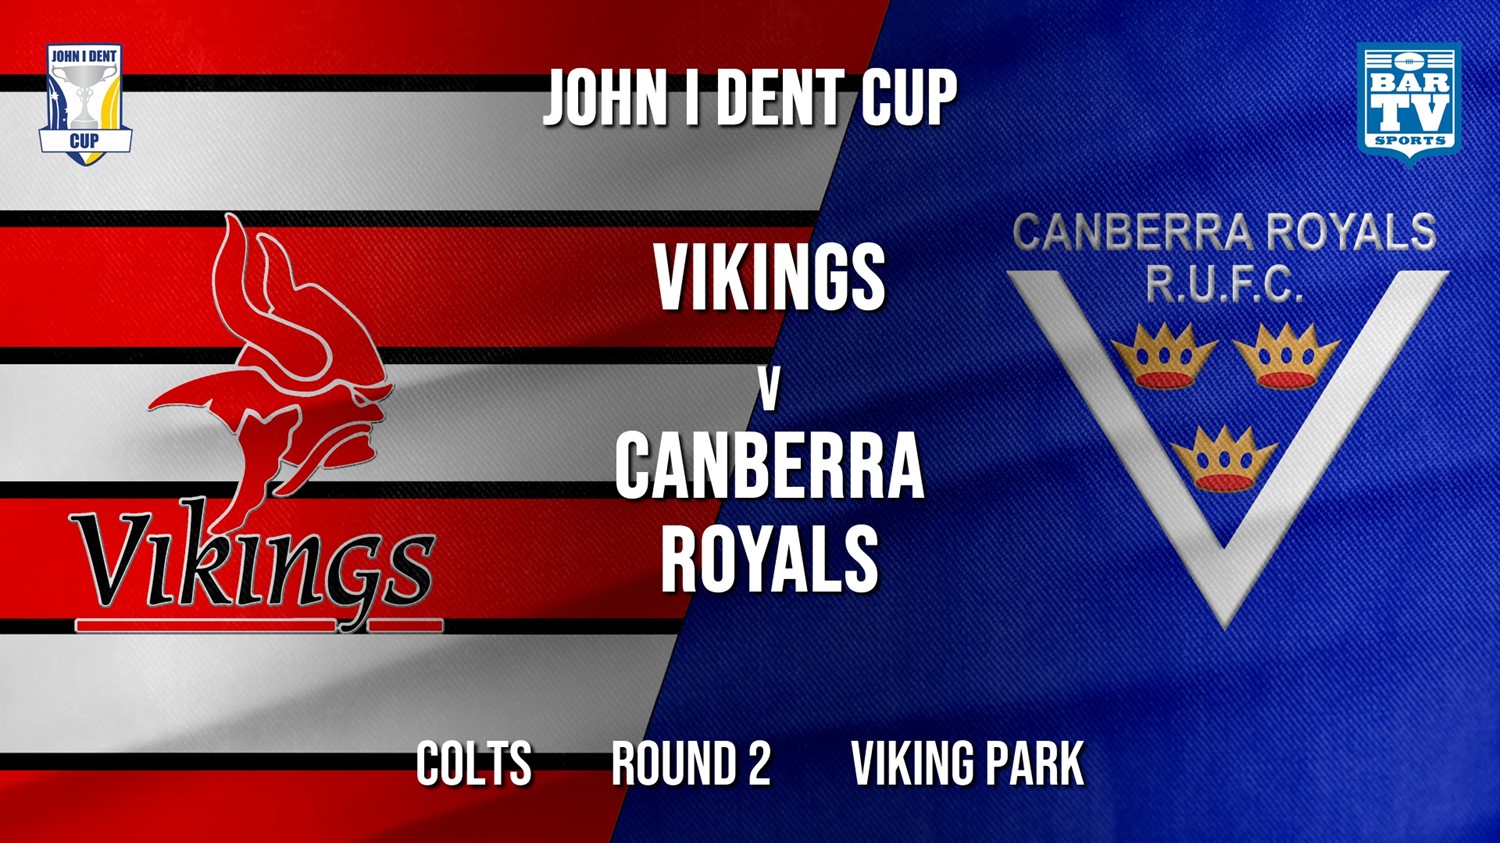 John I Dent Round 2 - Colts - Tuggeranong Vikings v Canberra Royals Minigame Slate Image